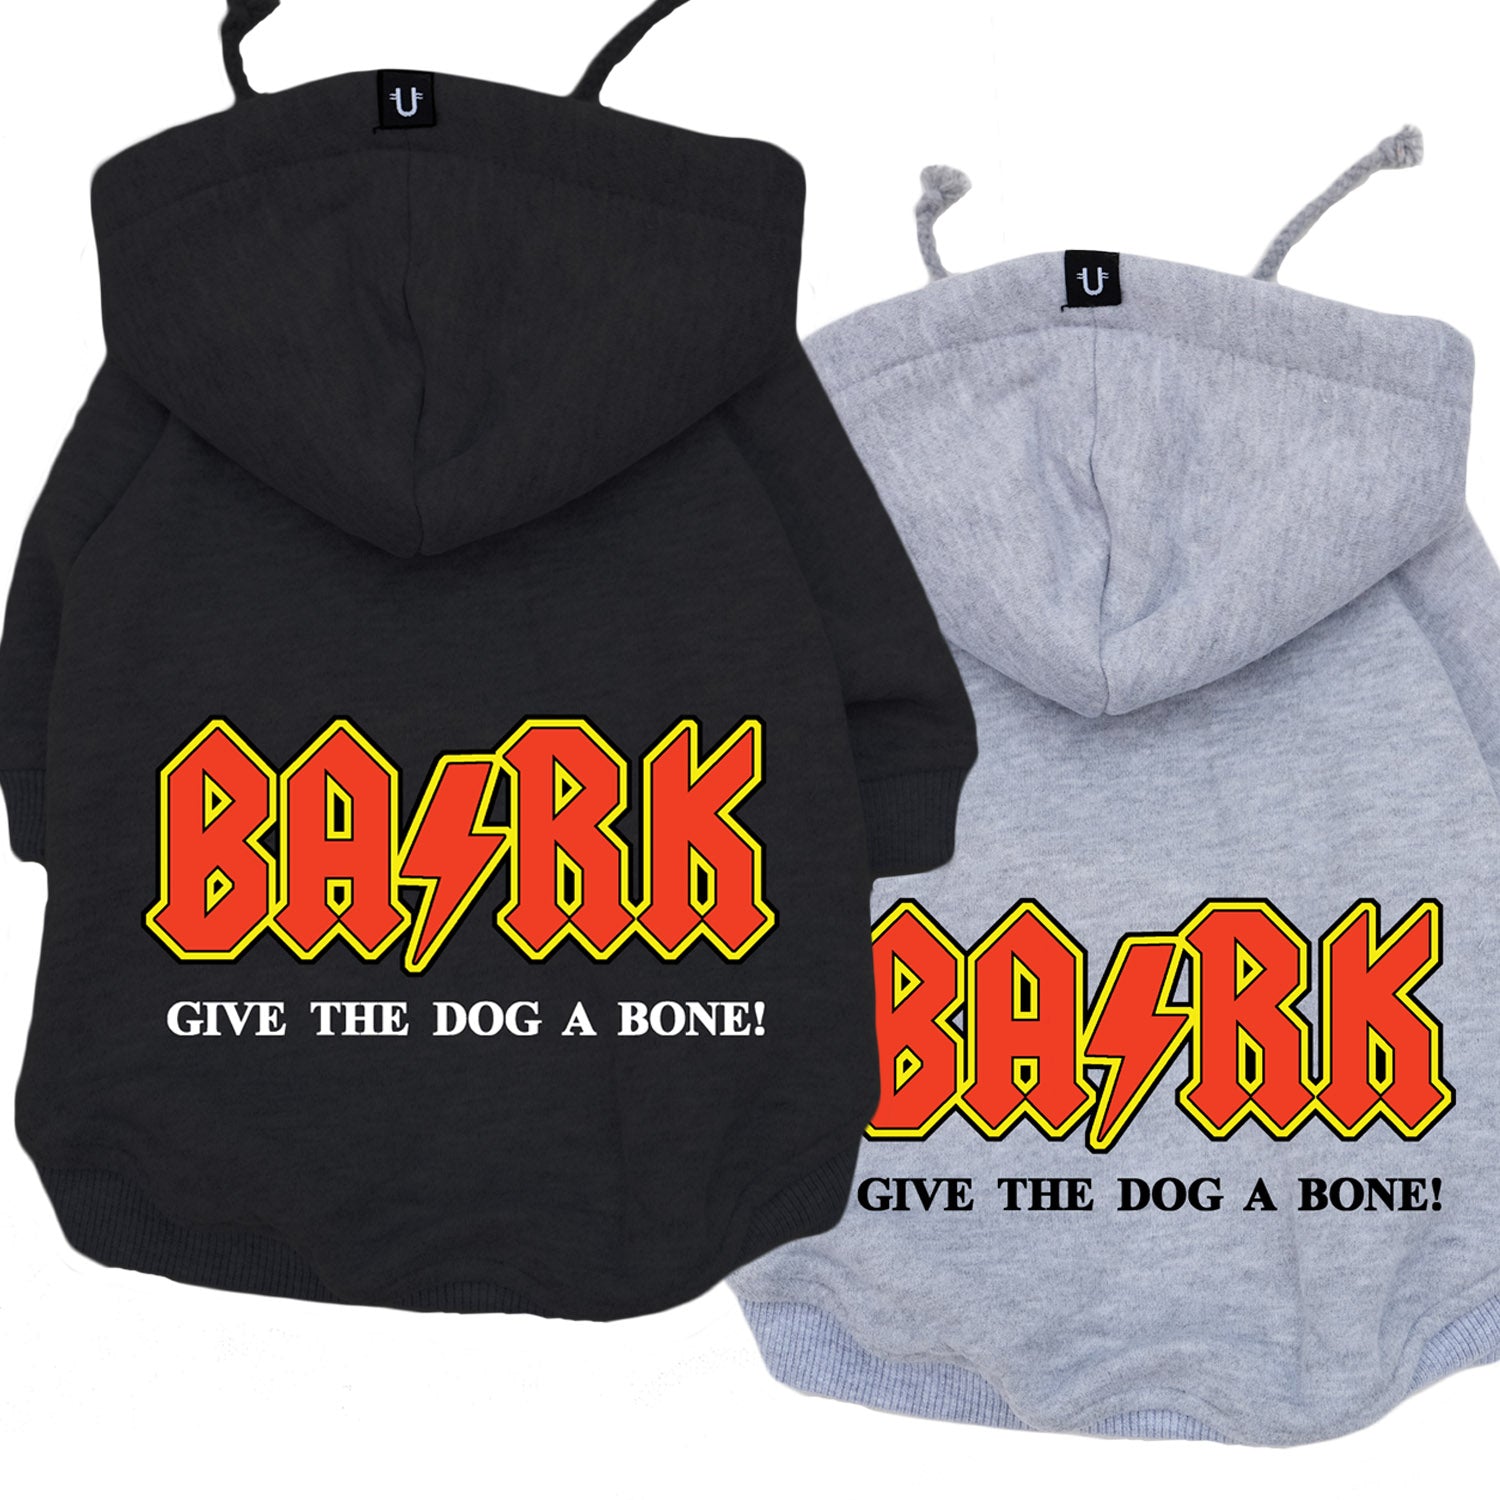 ACDC dog hoodie, band hoodie for dogs, rock dog clothing dog hoodie, large dog hoodie Australia